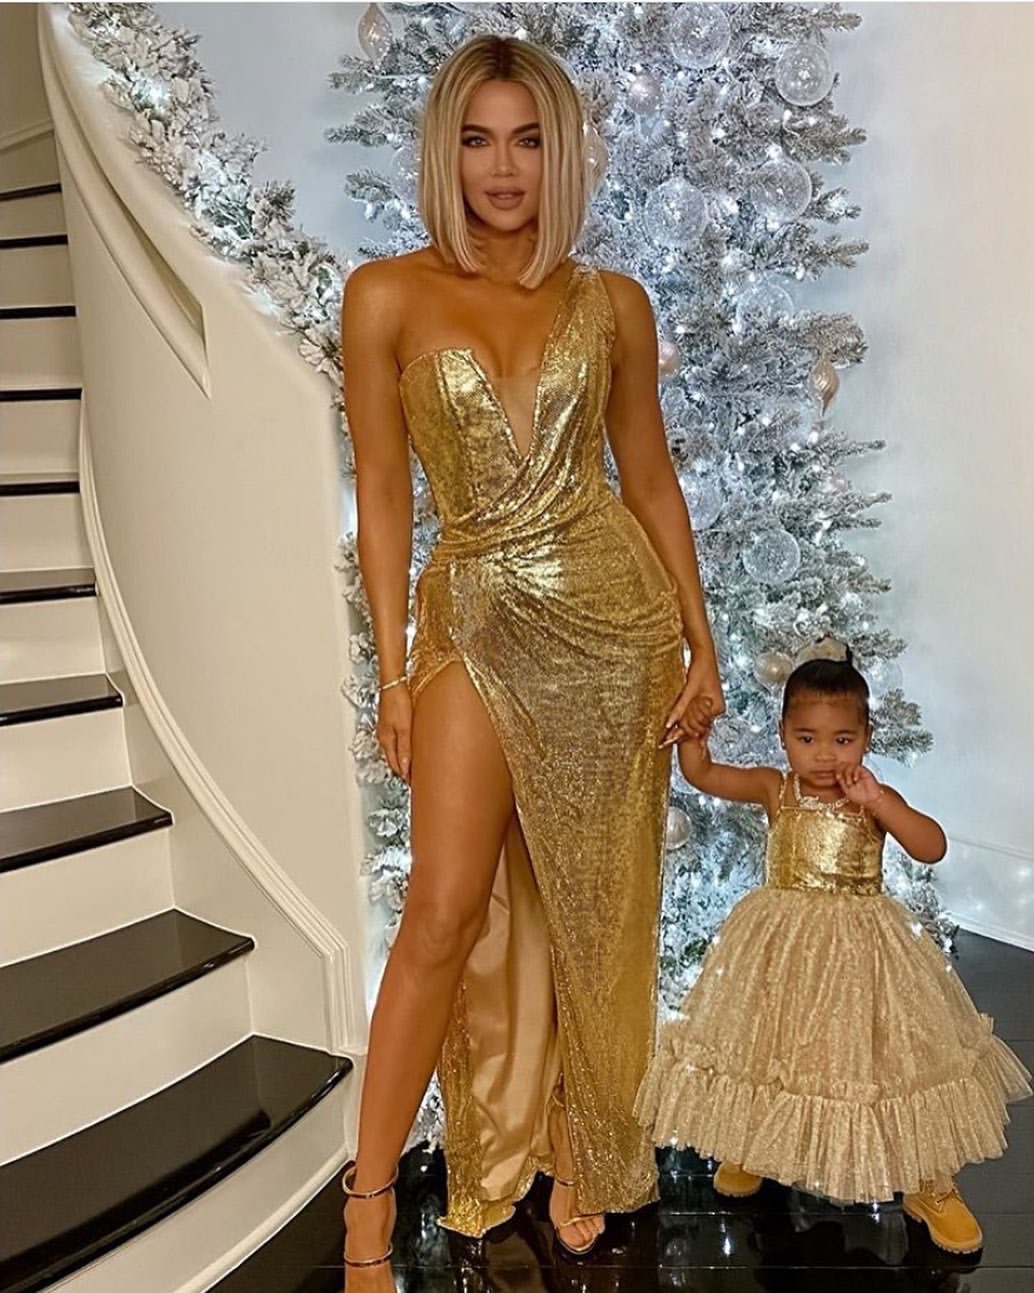 Kim Kardashian In Vintage Dior Gown Khloe Kardashian In Gold Bryan Hearns Dress And Kylie